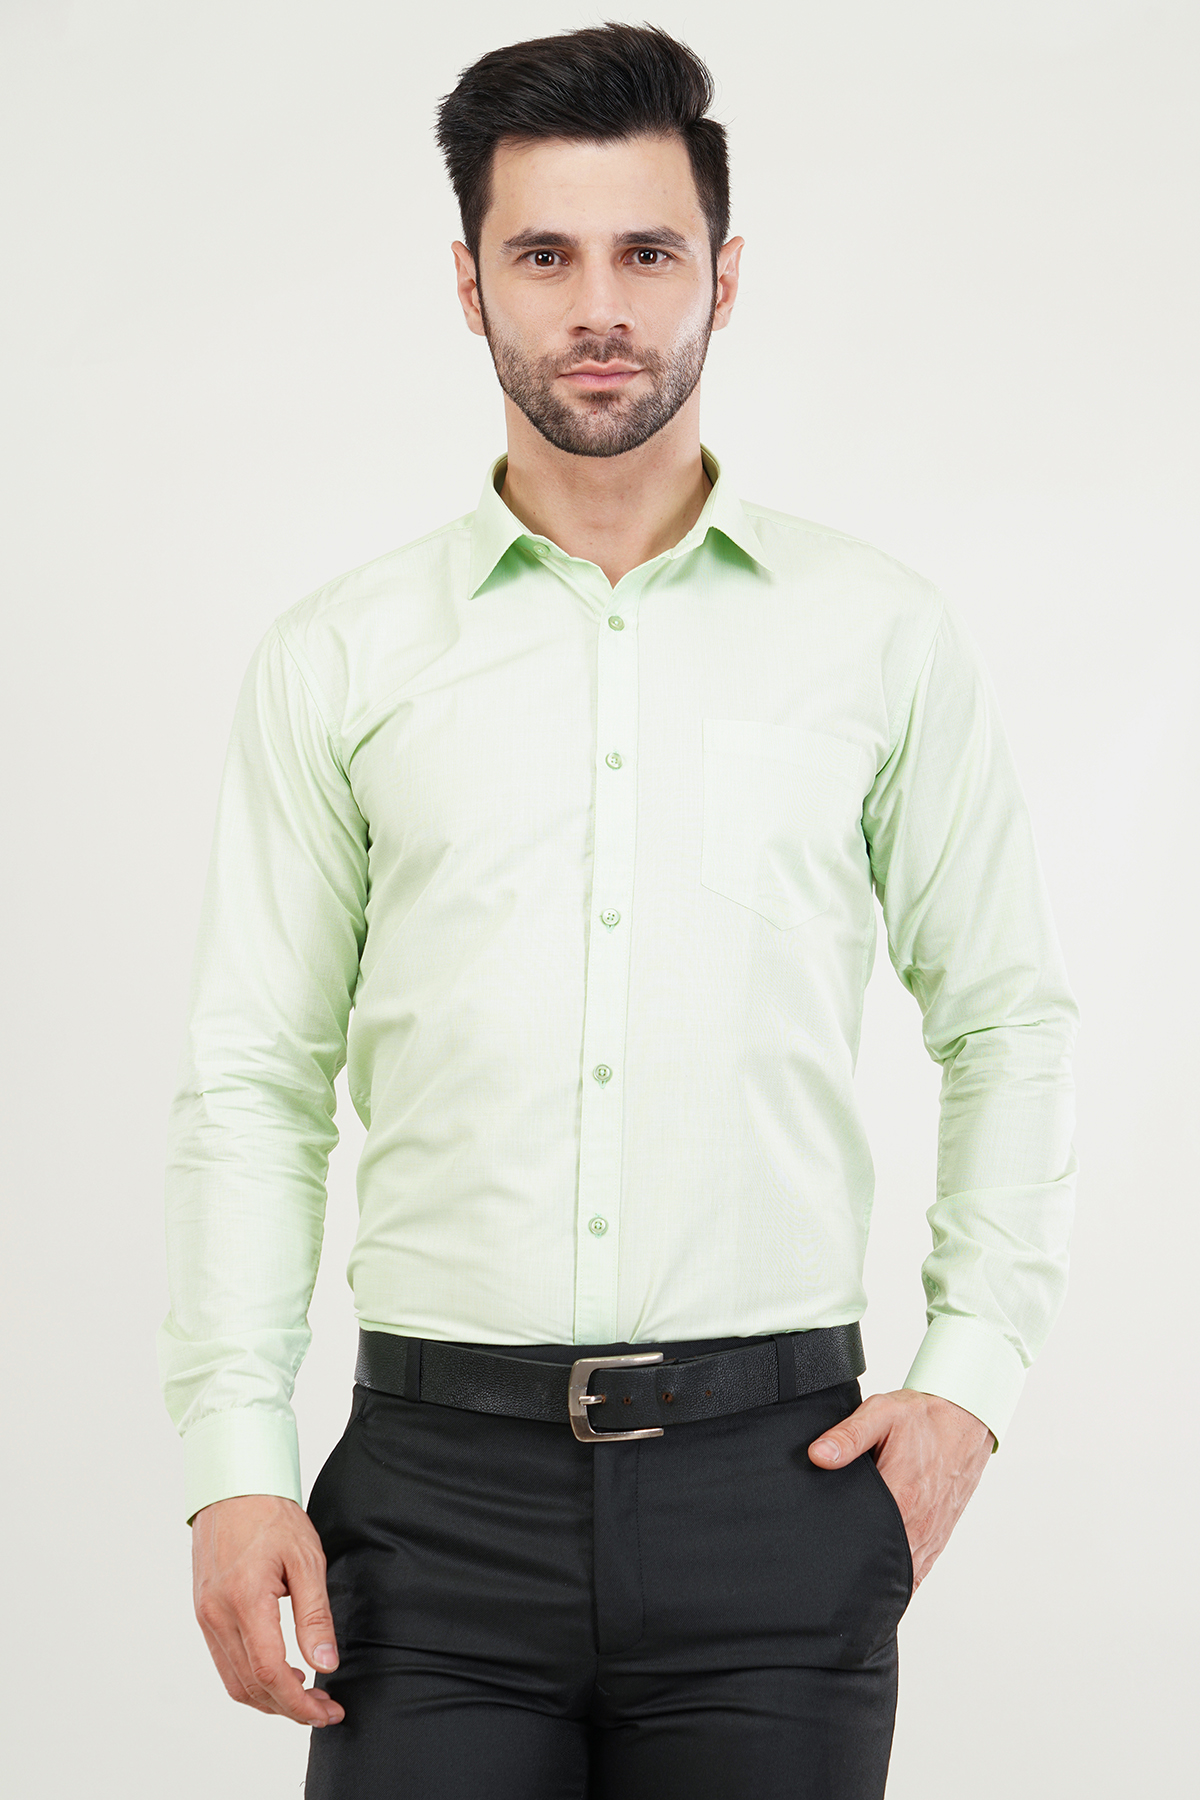 Pista Green Color Fila Fill Soft Premium Cotton Formal Shirt For Men’s